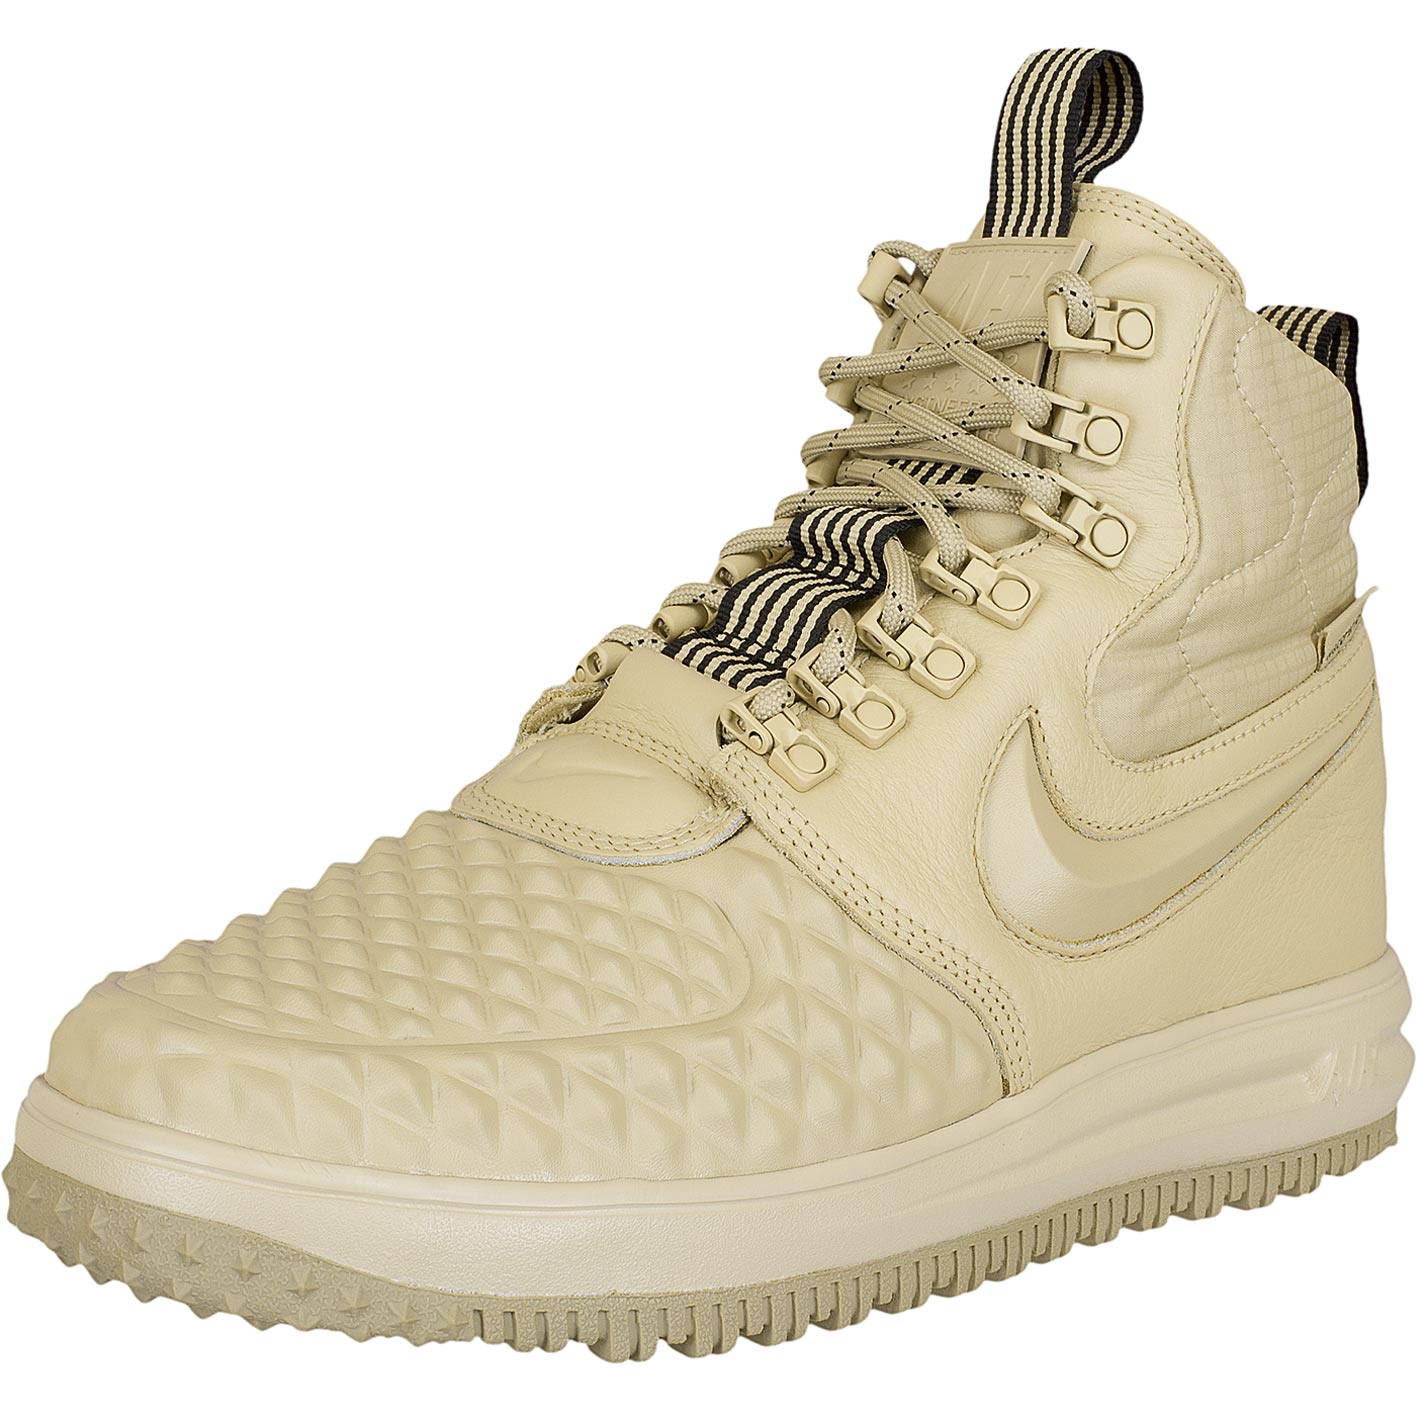 ☆ Nike Boots Lunar Force 1 ´17 Duckboot beige - hier bestellen!